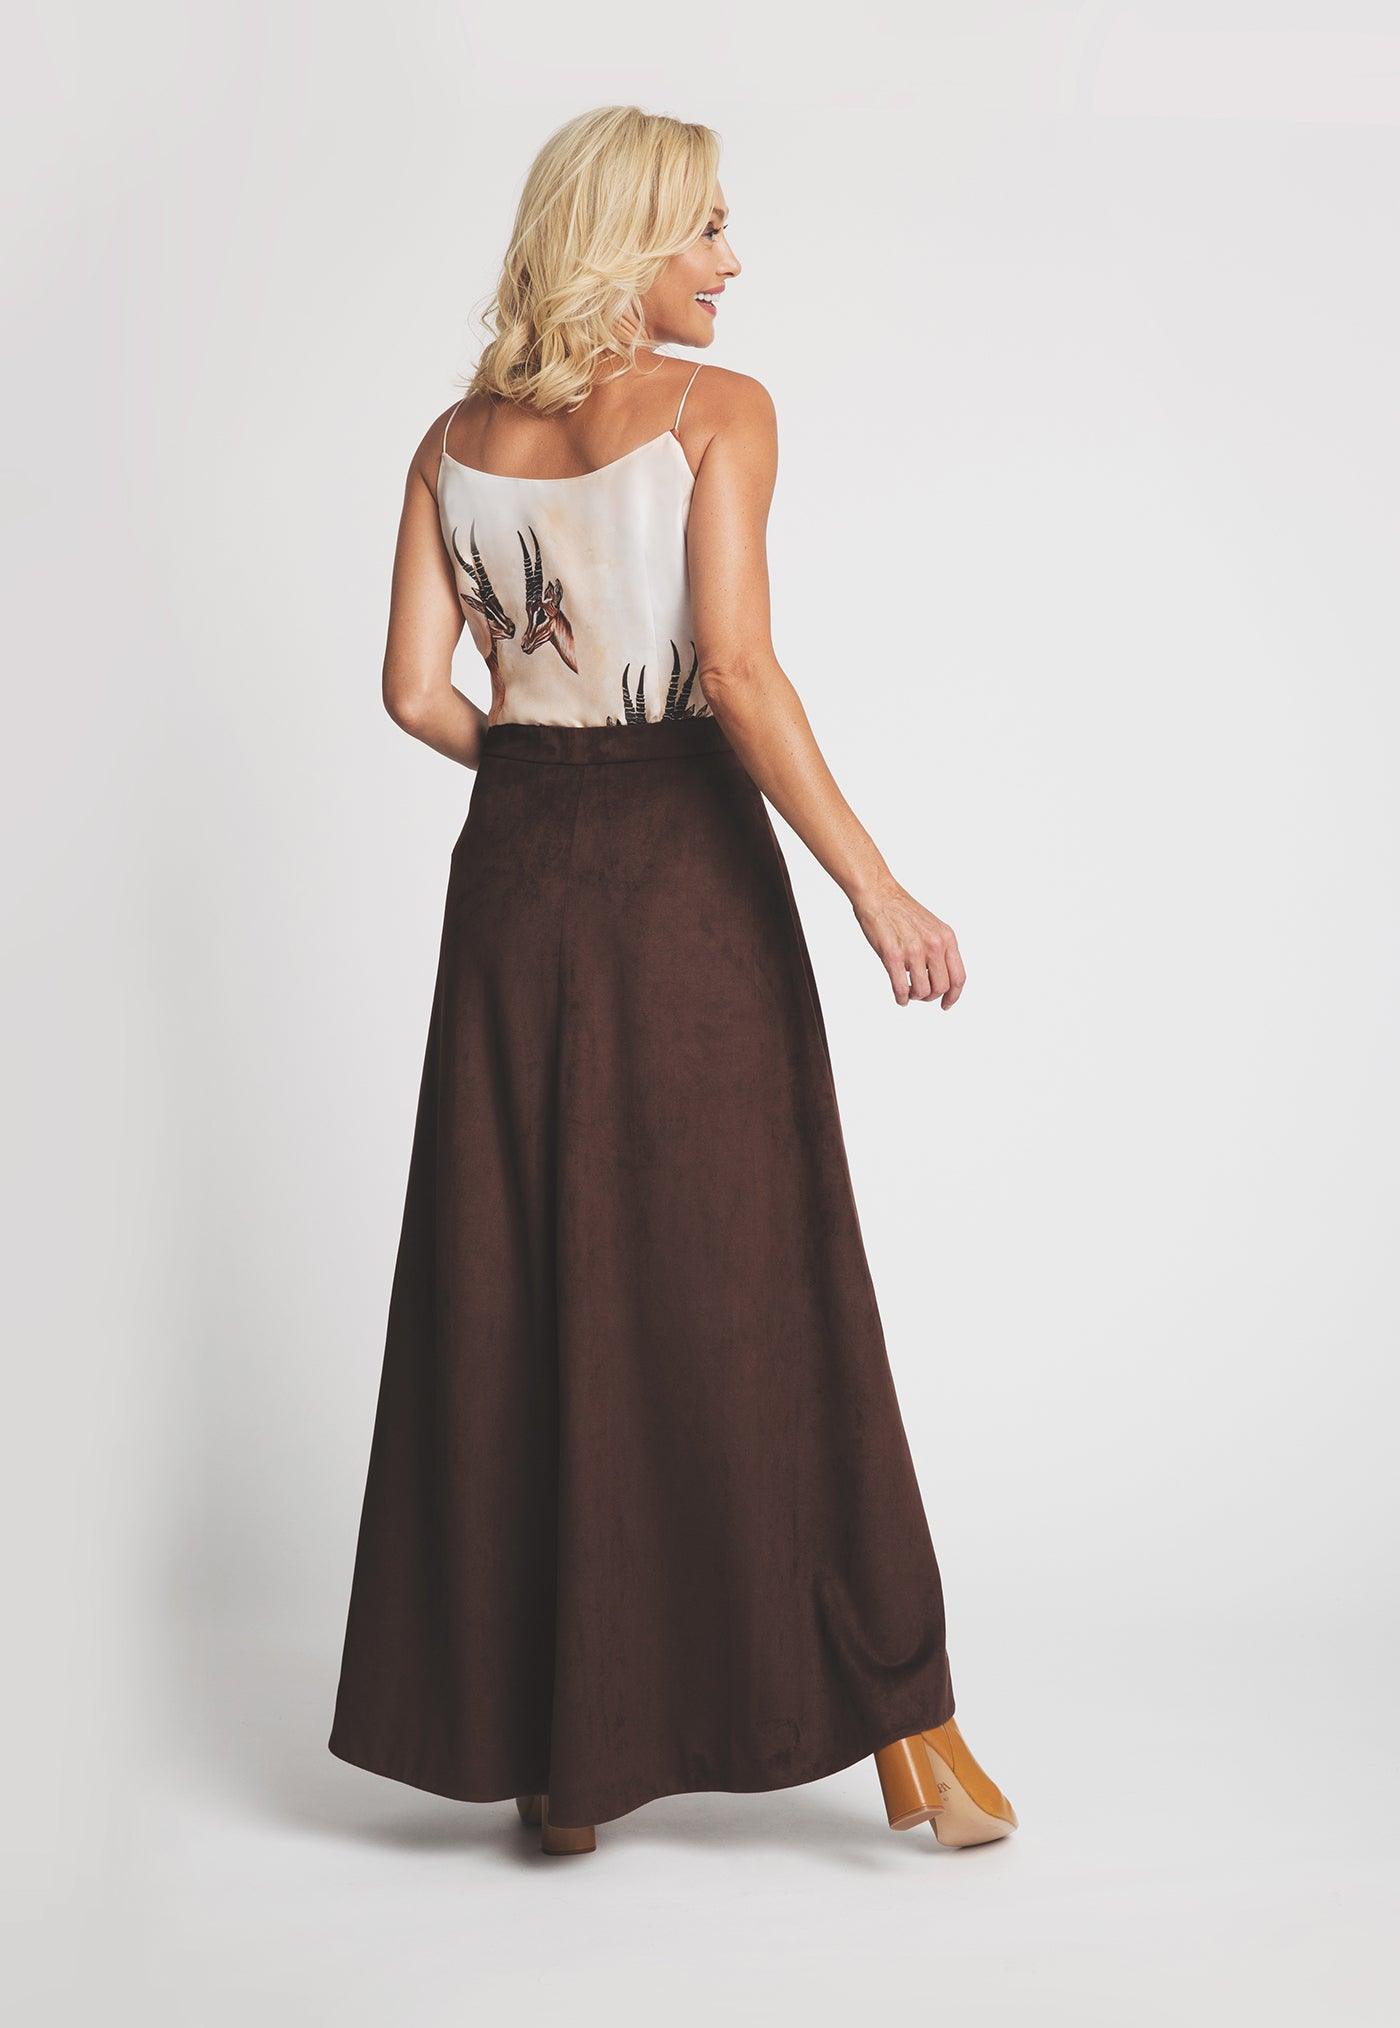 brown suede long skirt with deer printed silk camisole